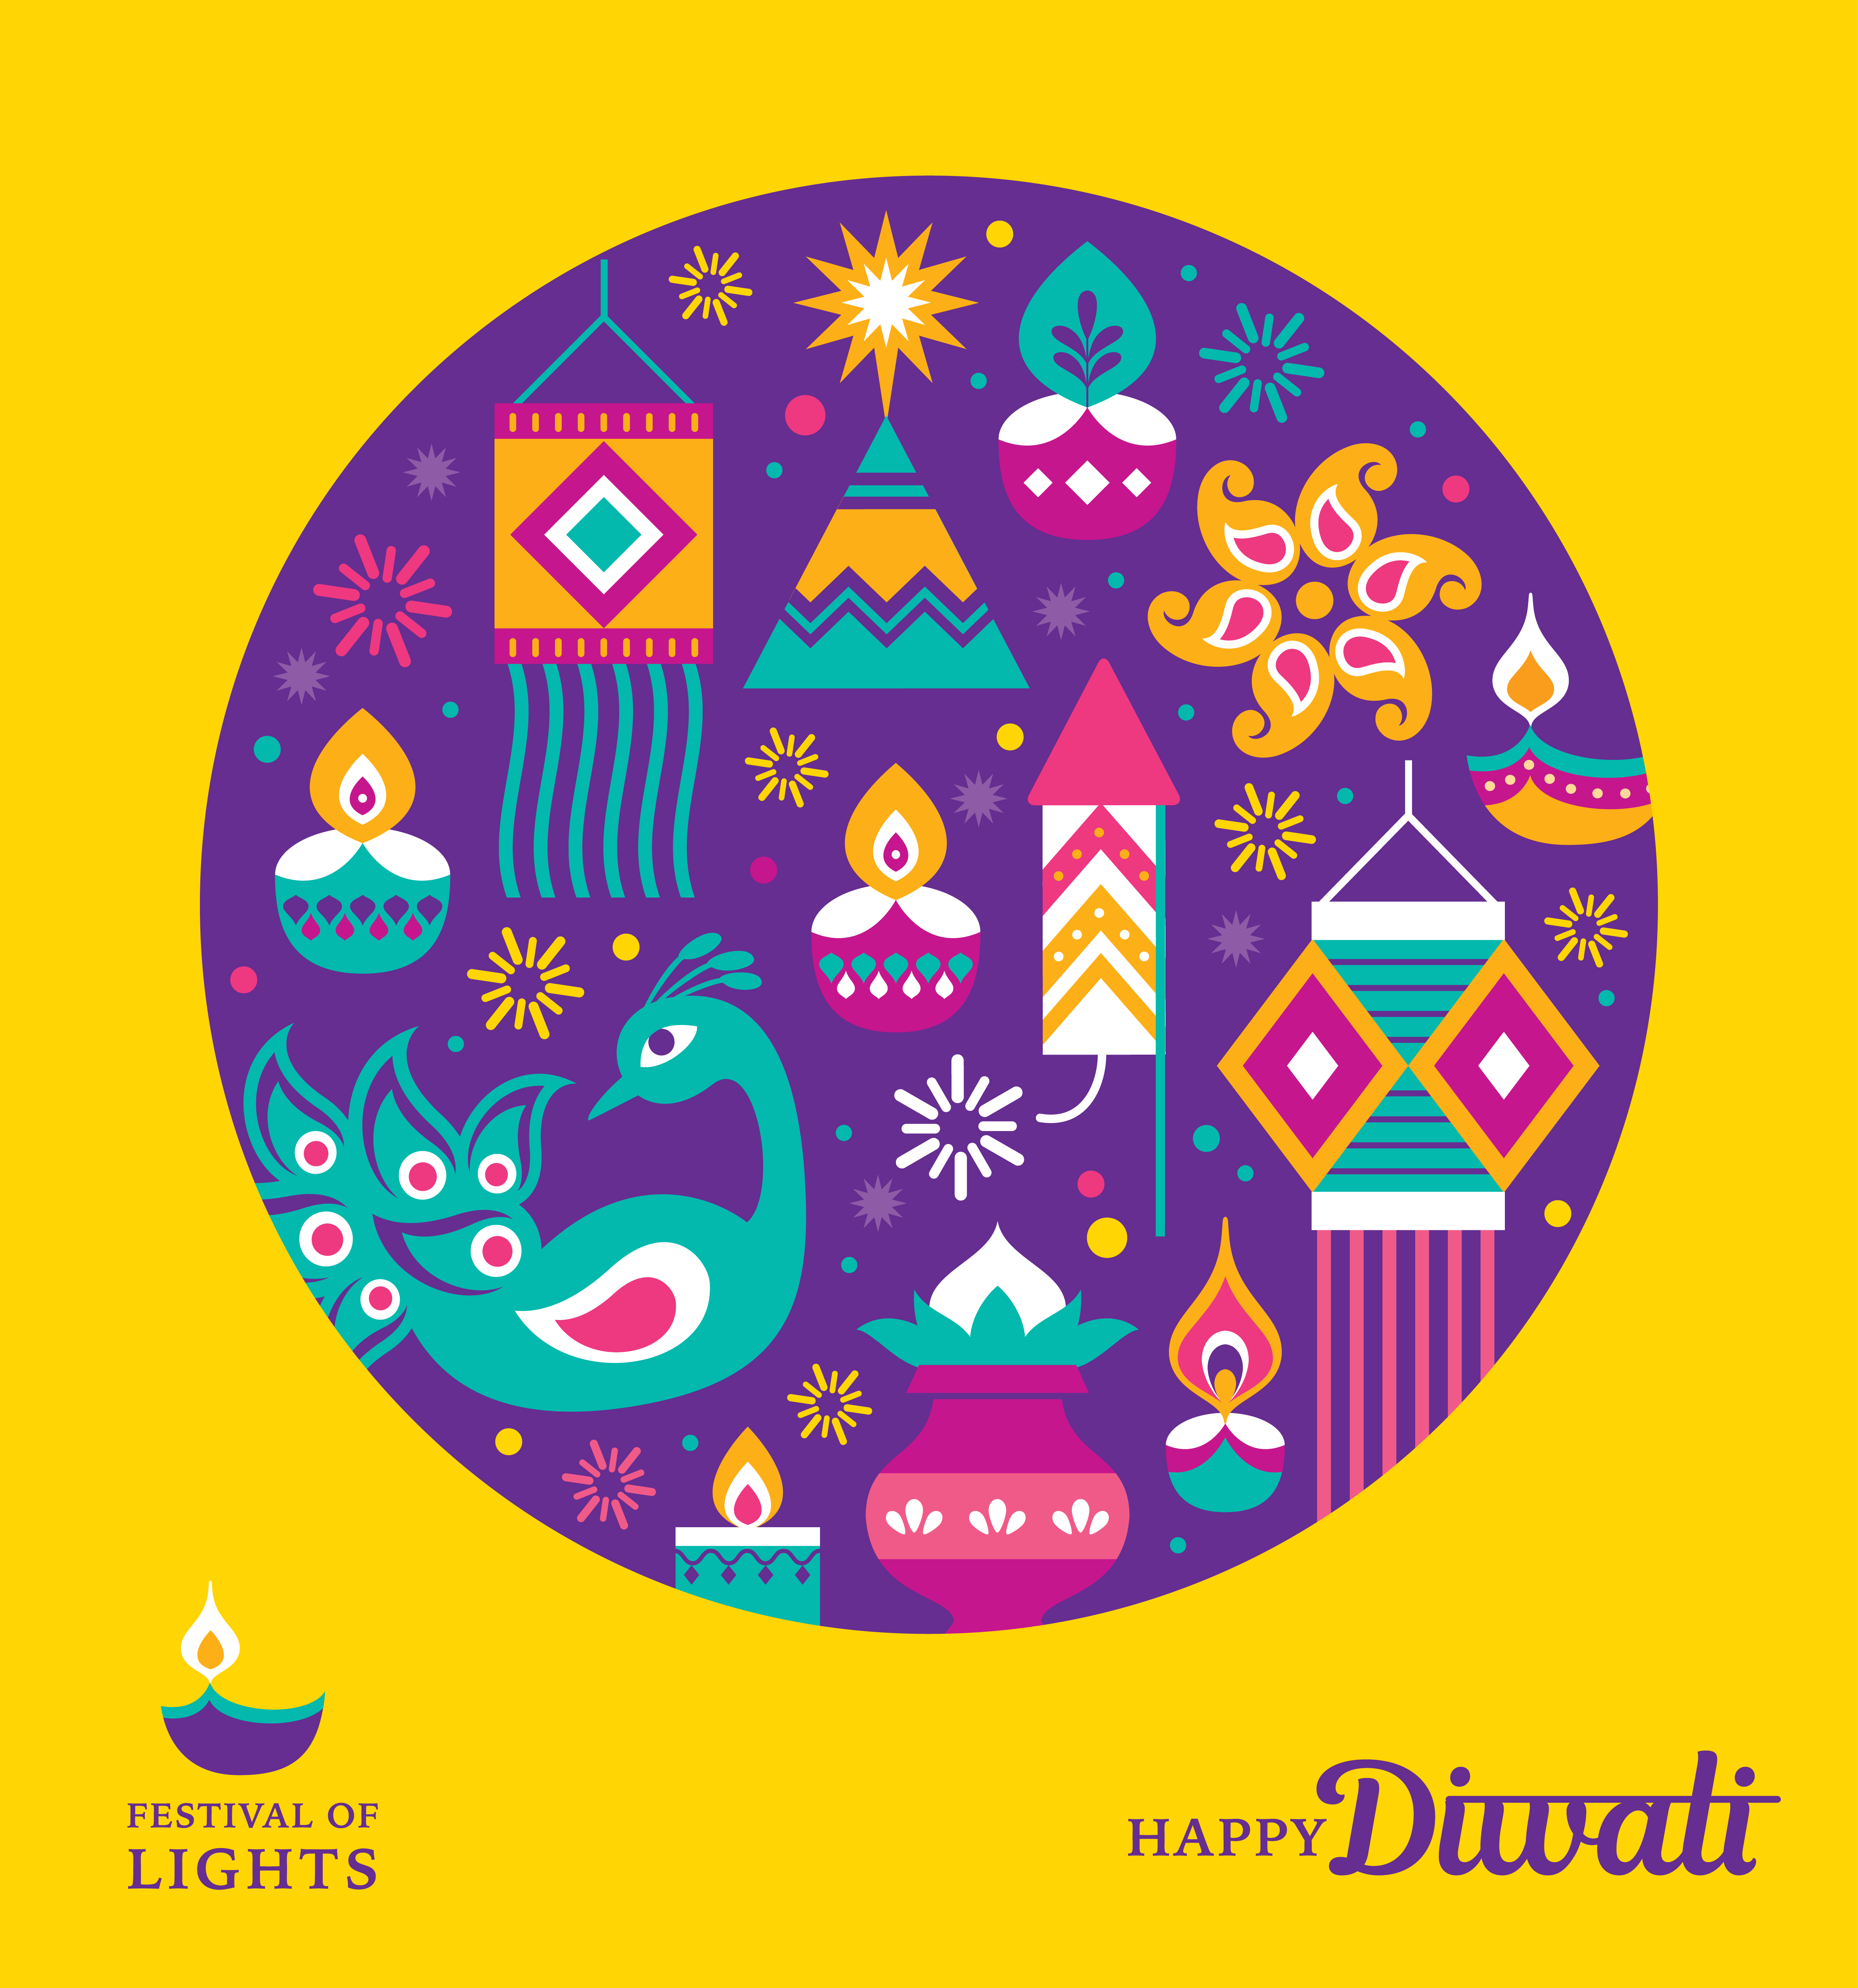 Happy diwali background design vectors 01 free download